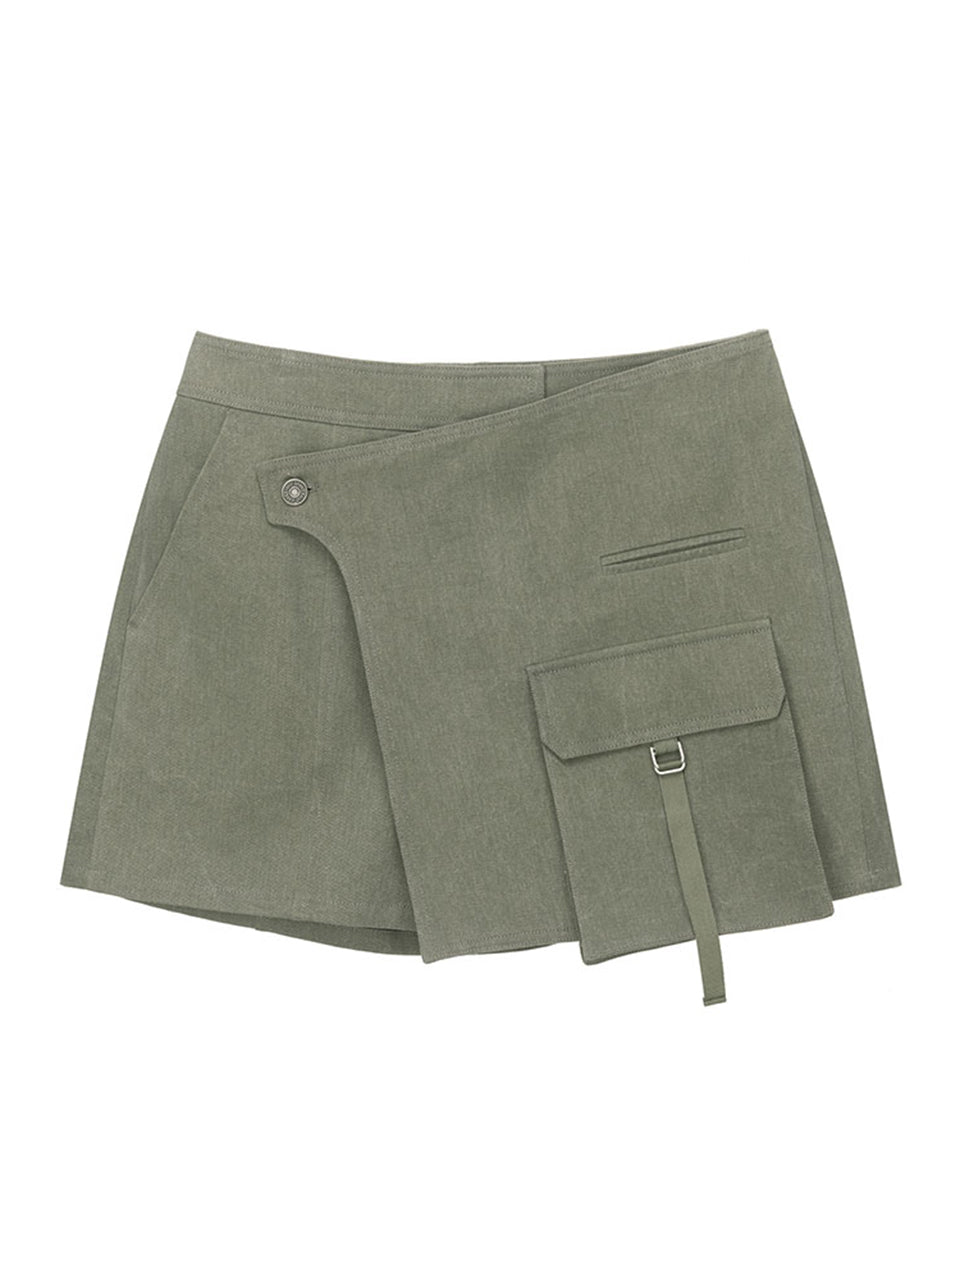 Wrap Pocket Skirt Pants in Khaki